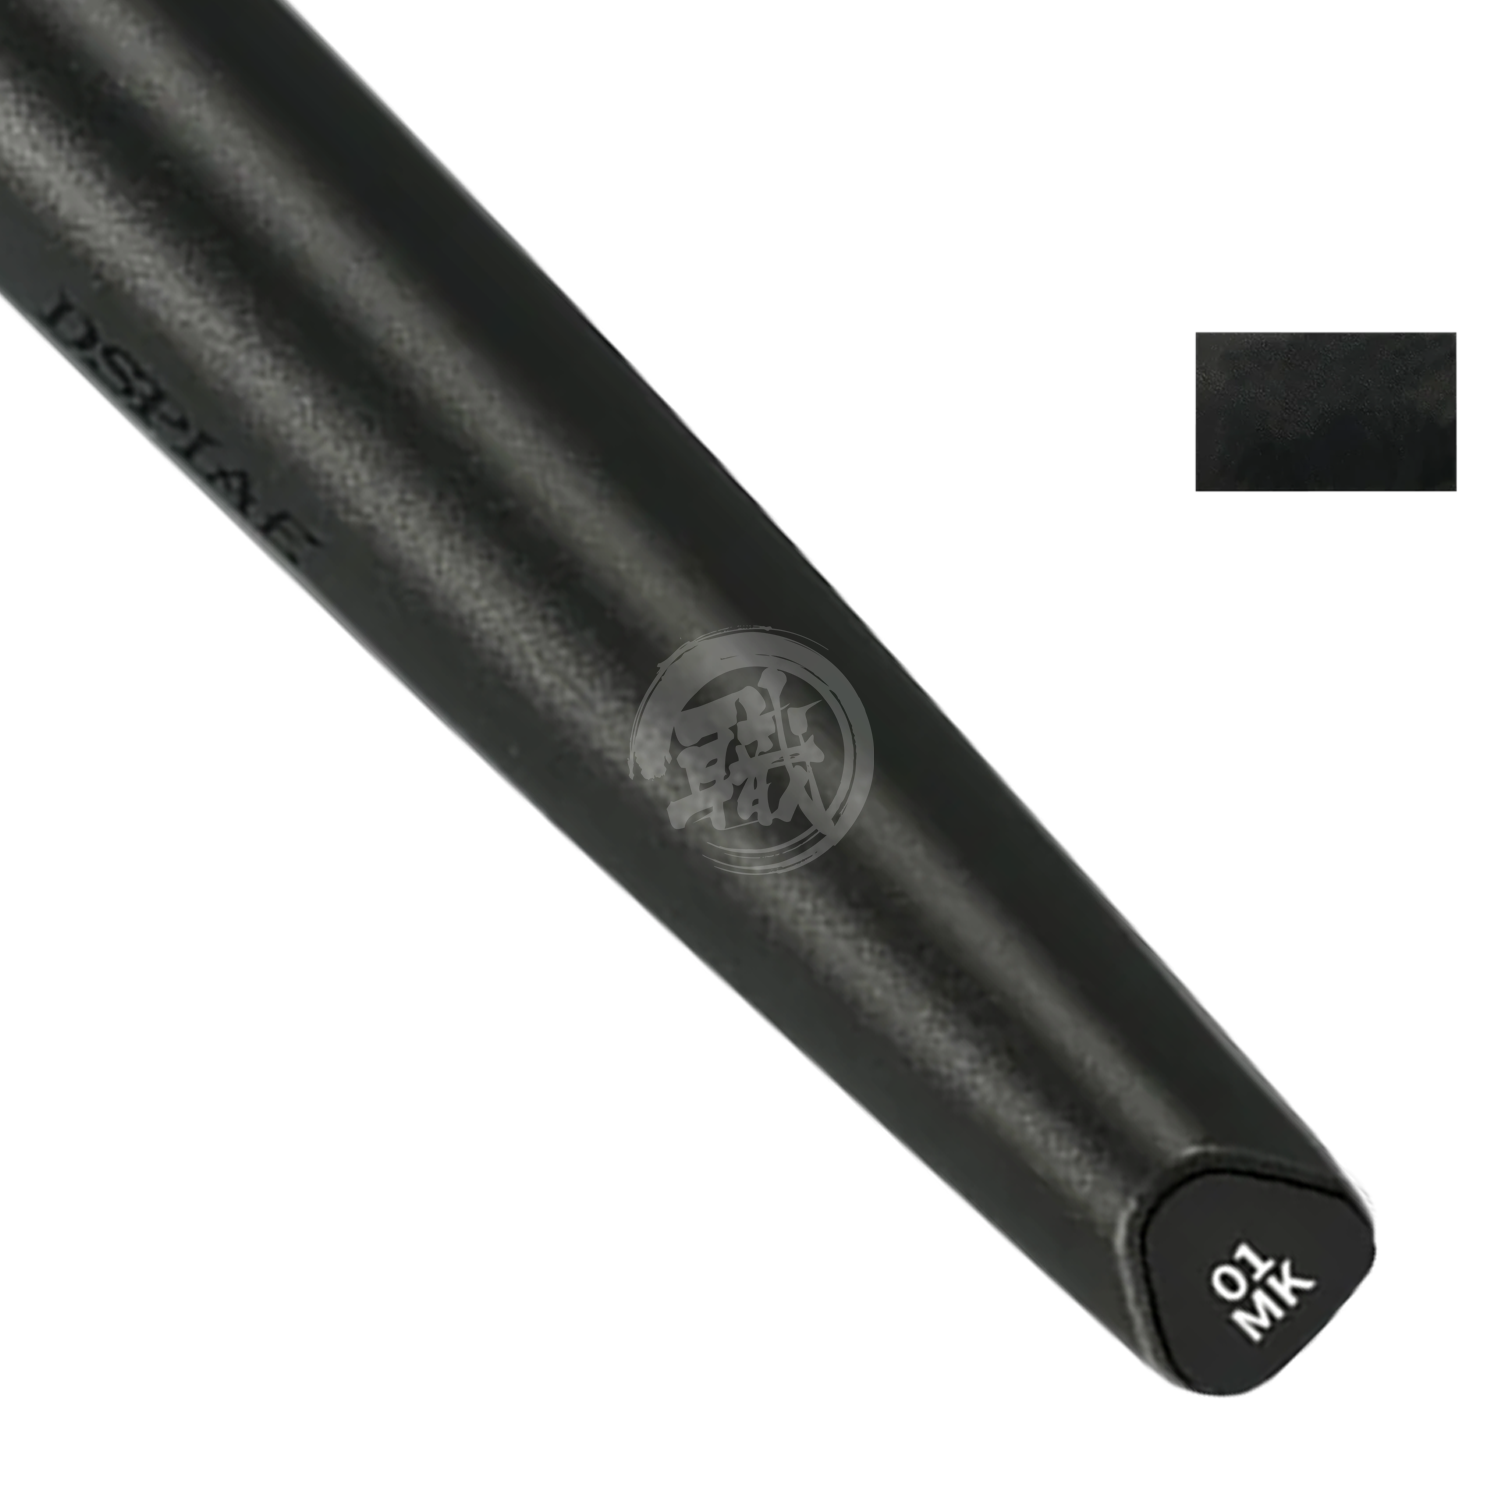 DSPIAE - MK-01 Pure Black Soft Tip Acrylic Marker - ShokuninGunpla